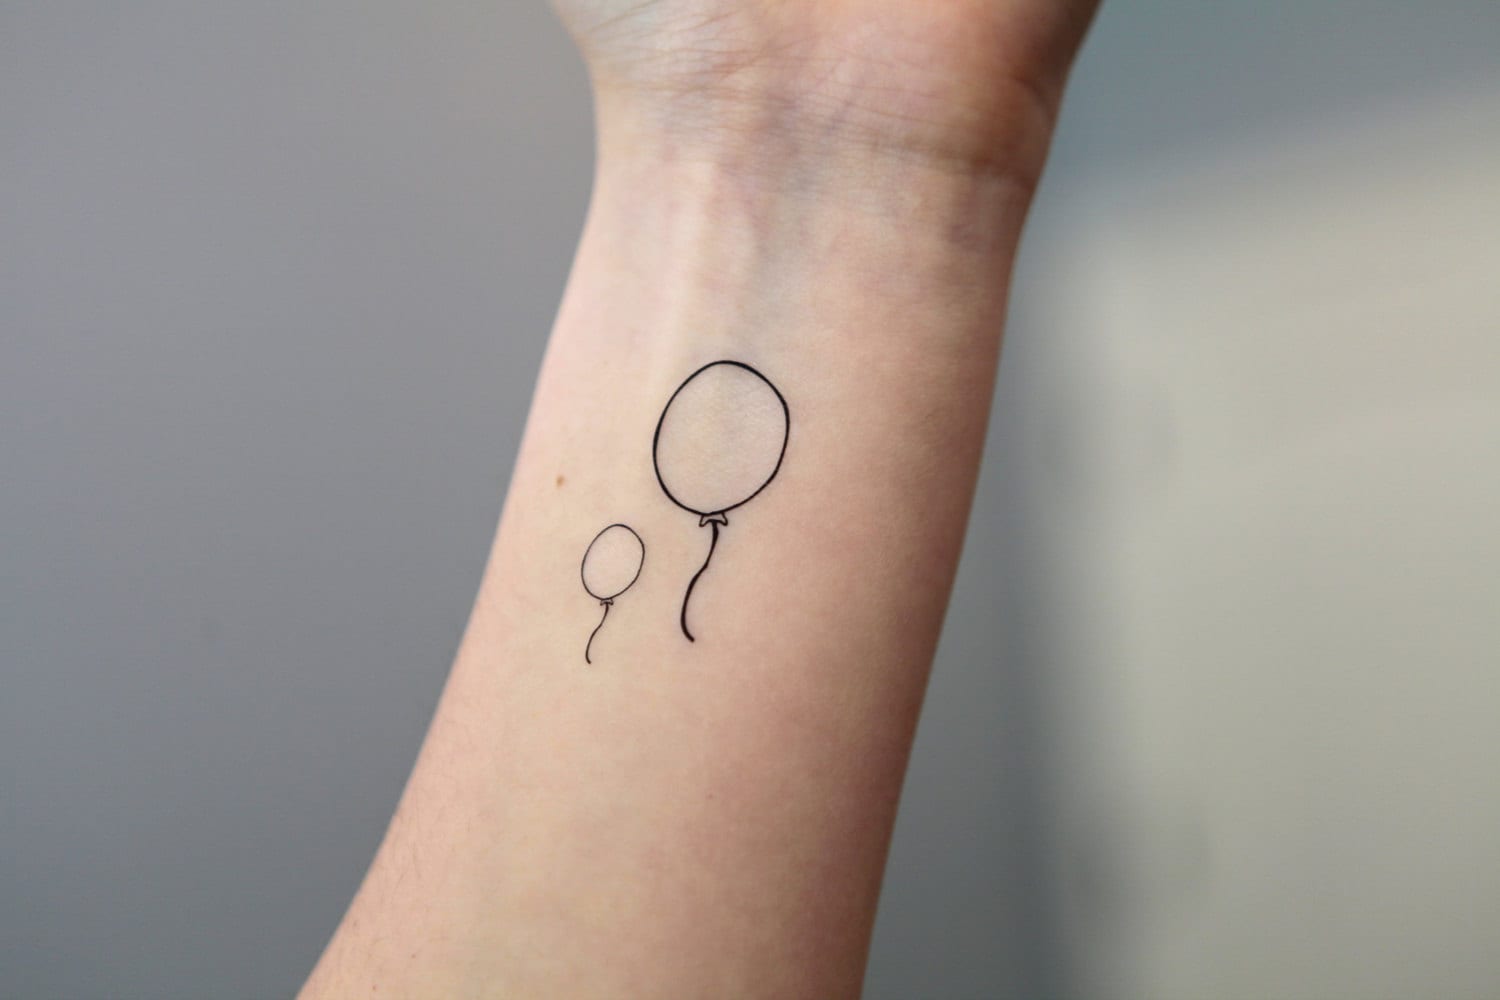 Tattoo Ideas for Girls